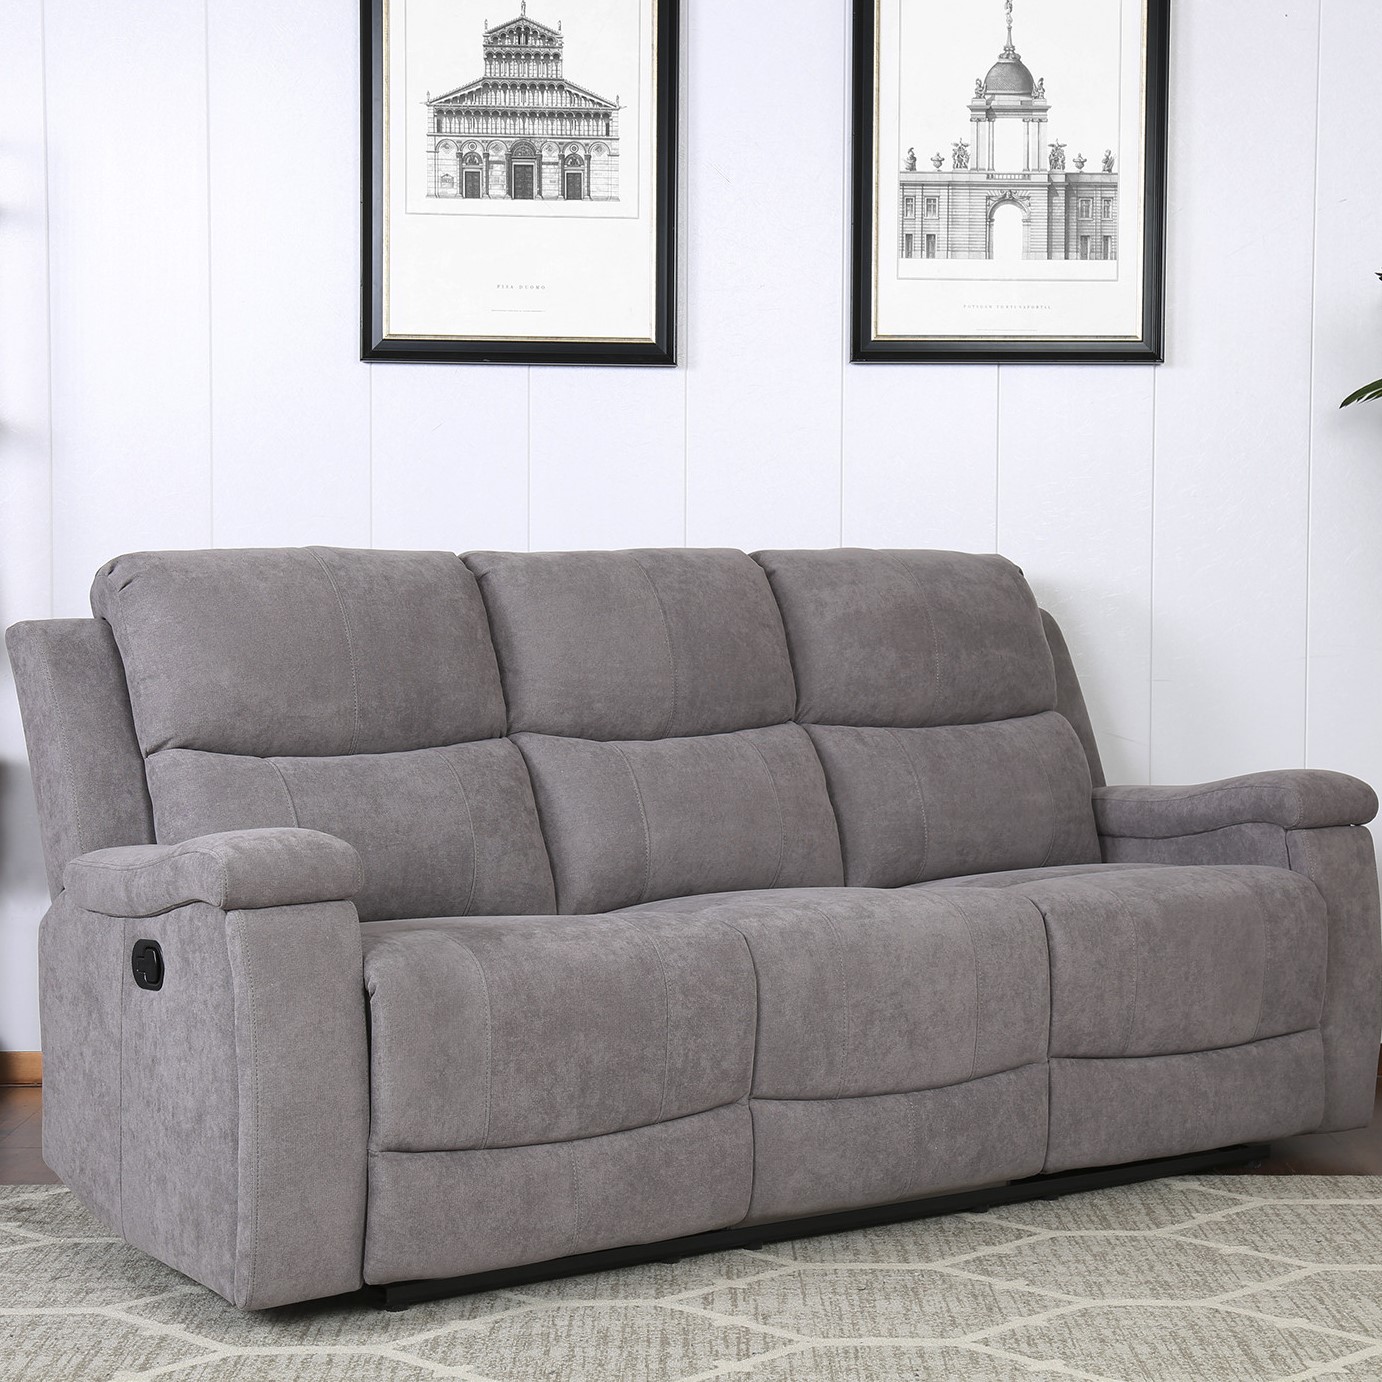 Ledbury 3 Seater Grey Fabric Manual Recliner Sofa Image 1